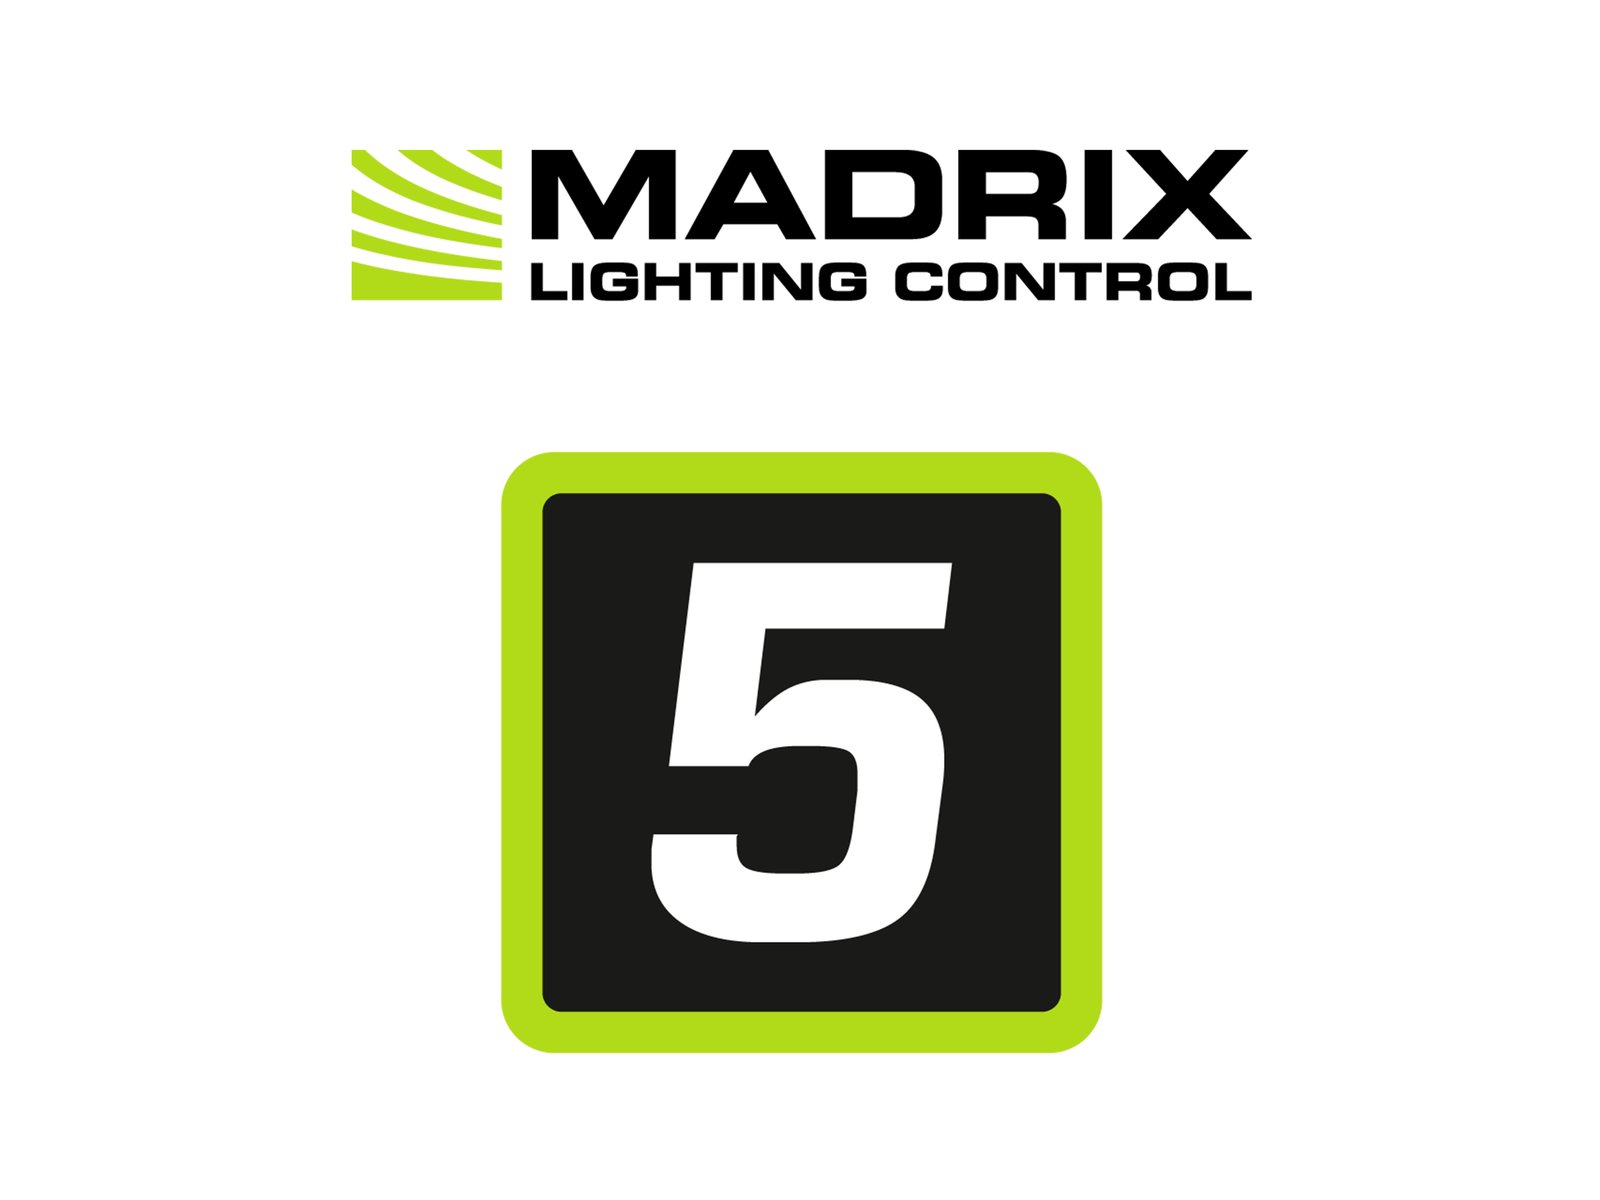 MADRIX Software 5 License professional - neonaffair